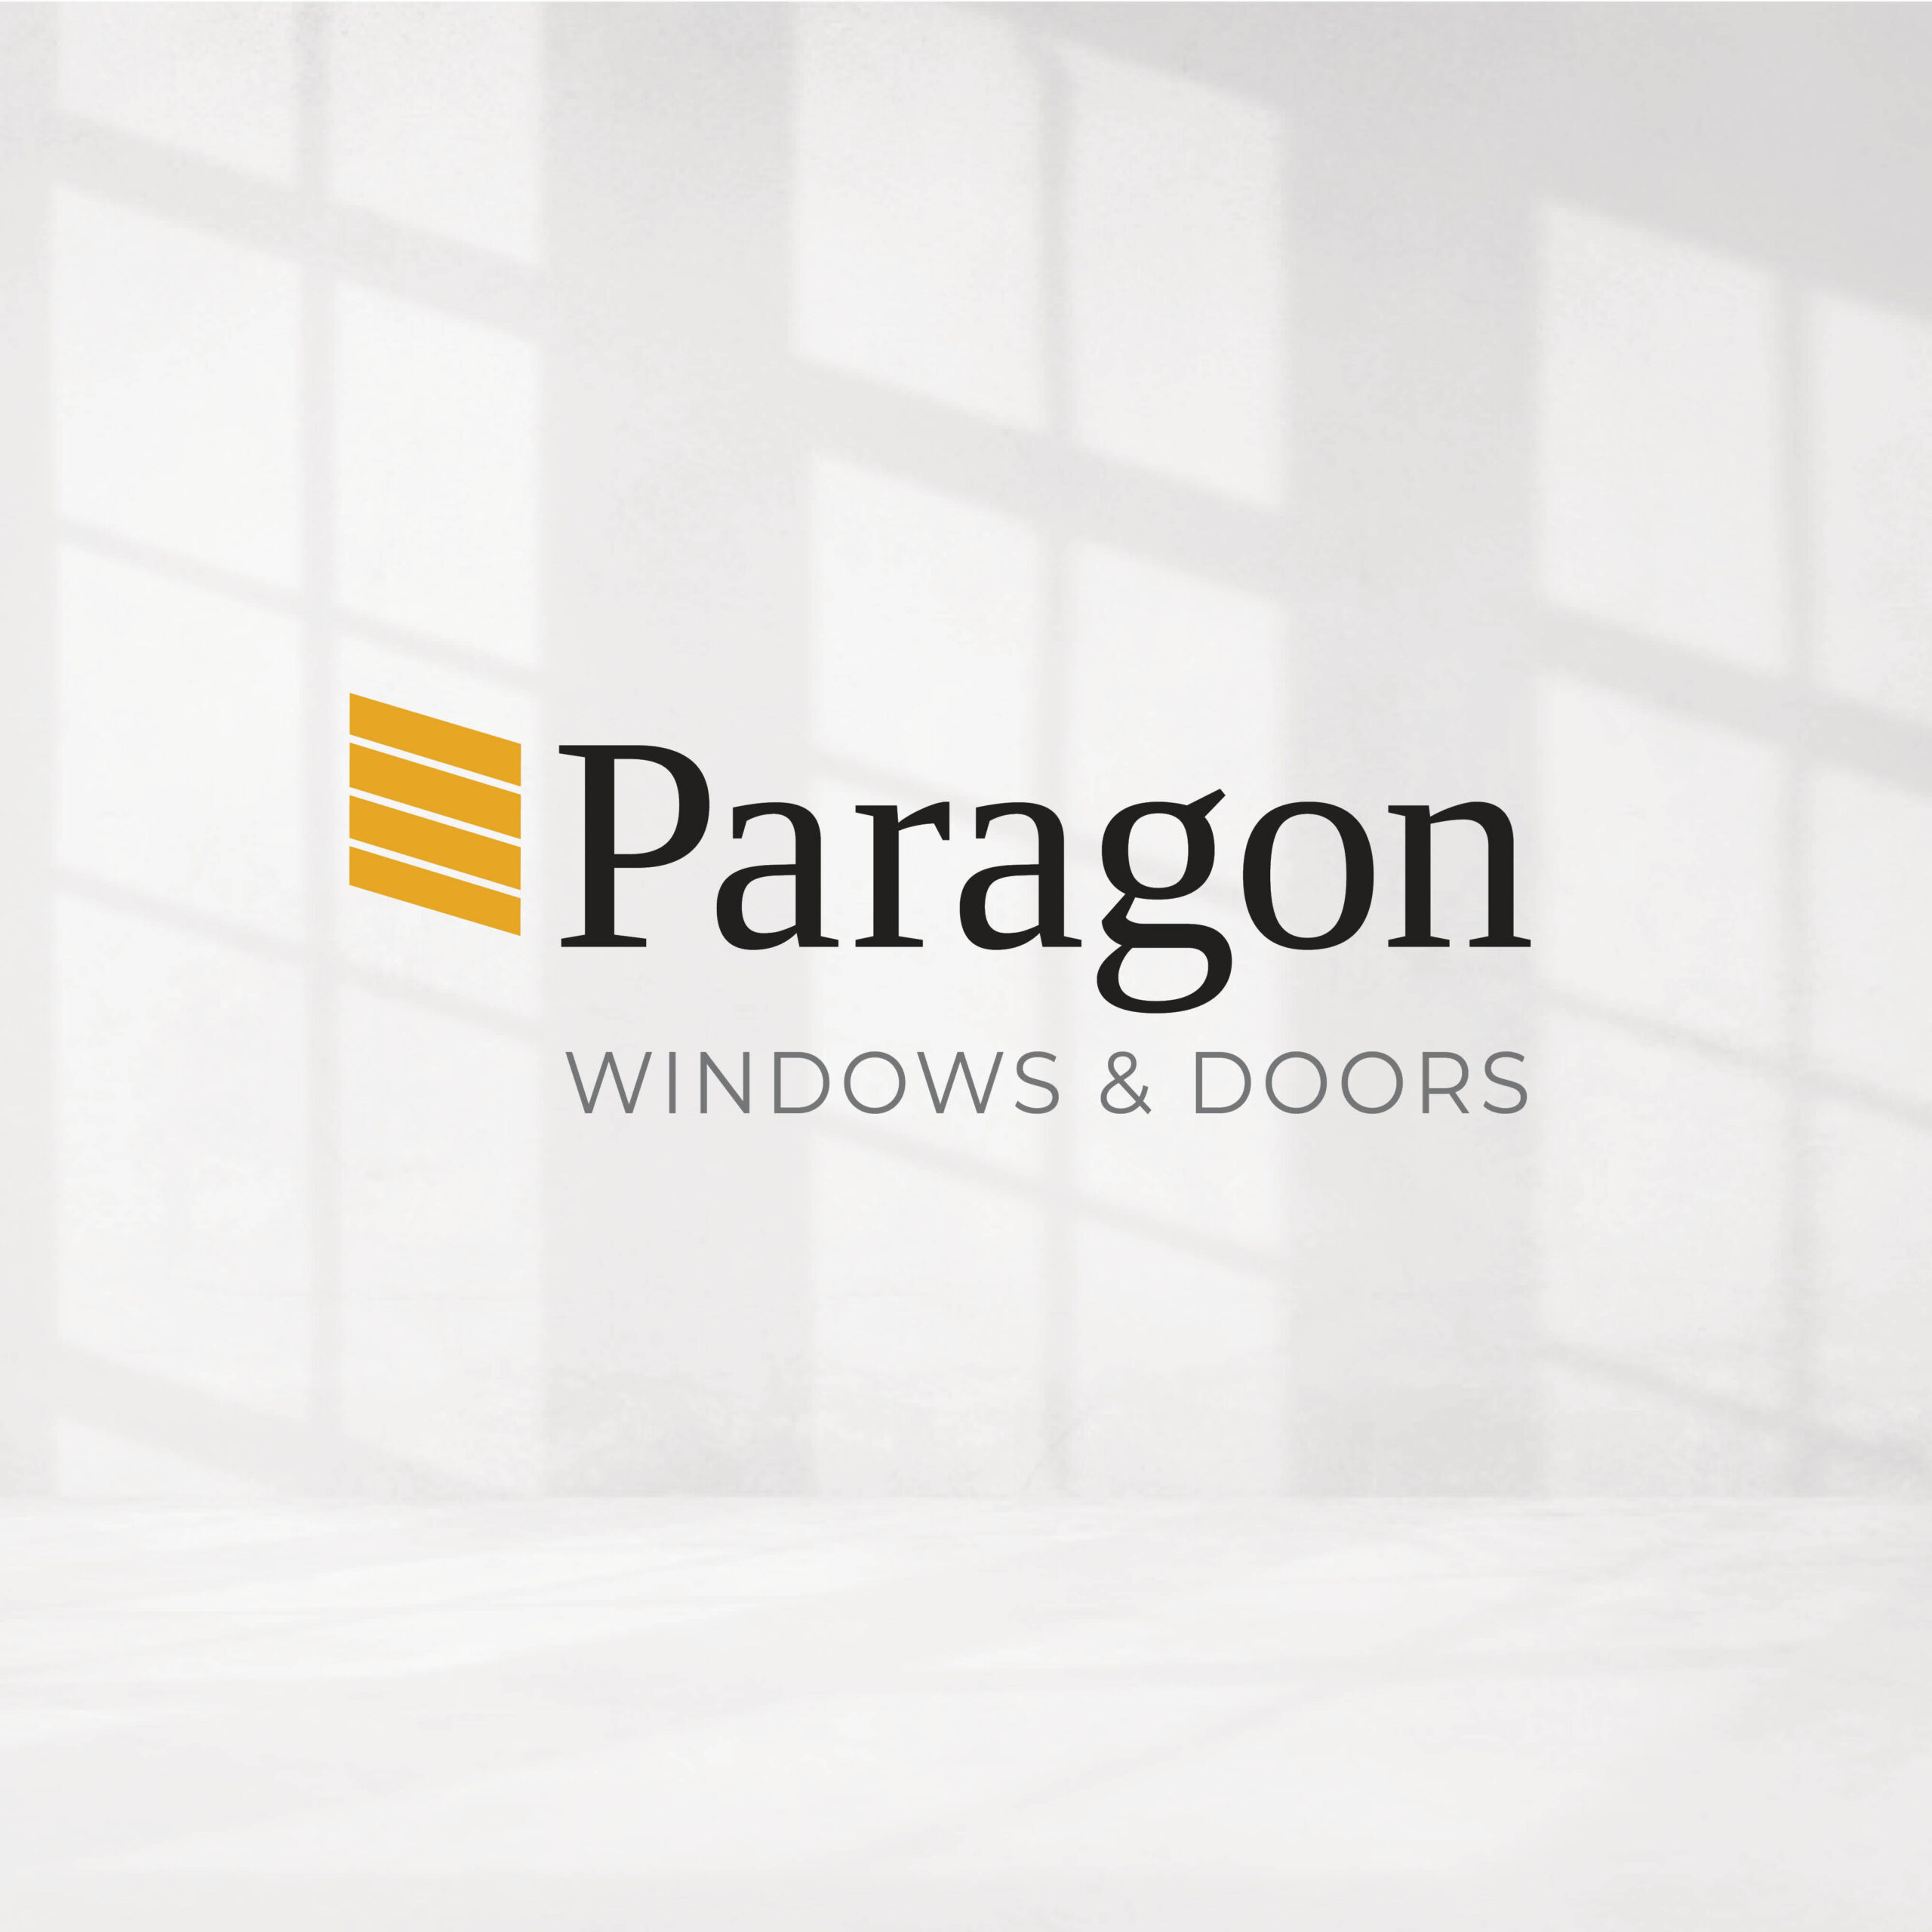 Paragon Logo & Branding